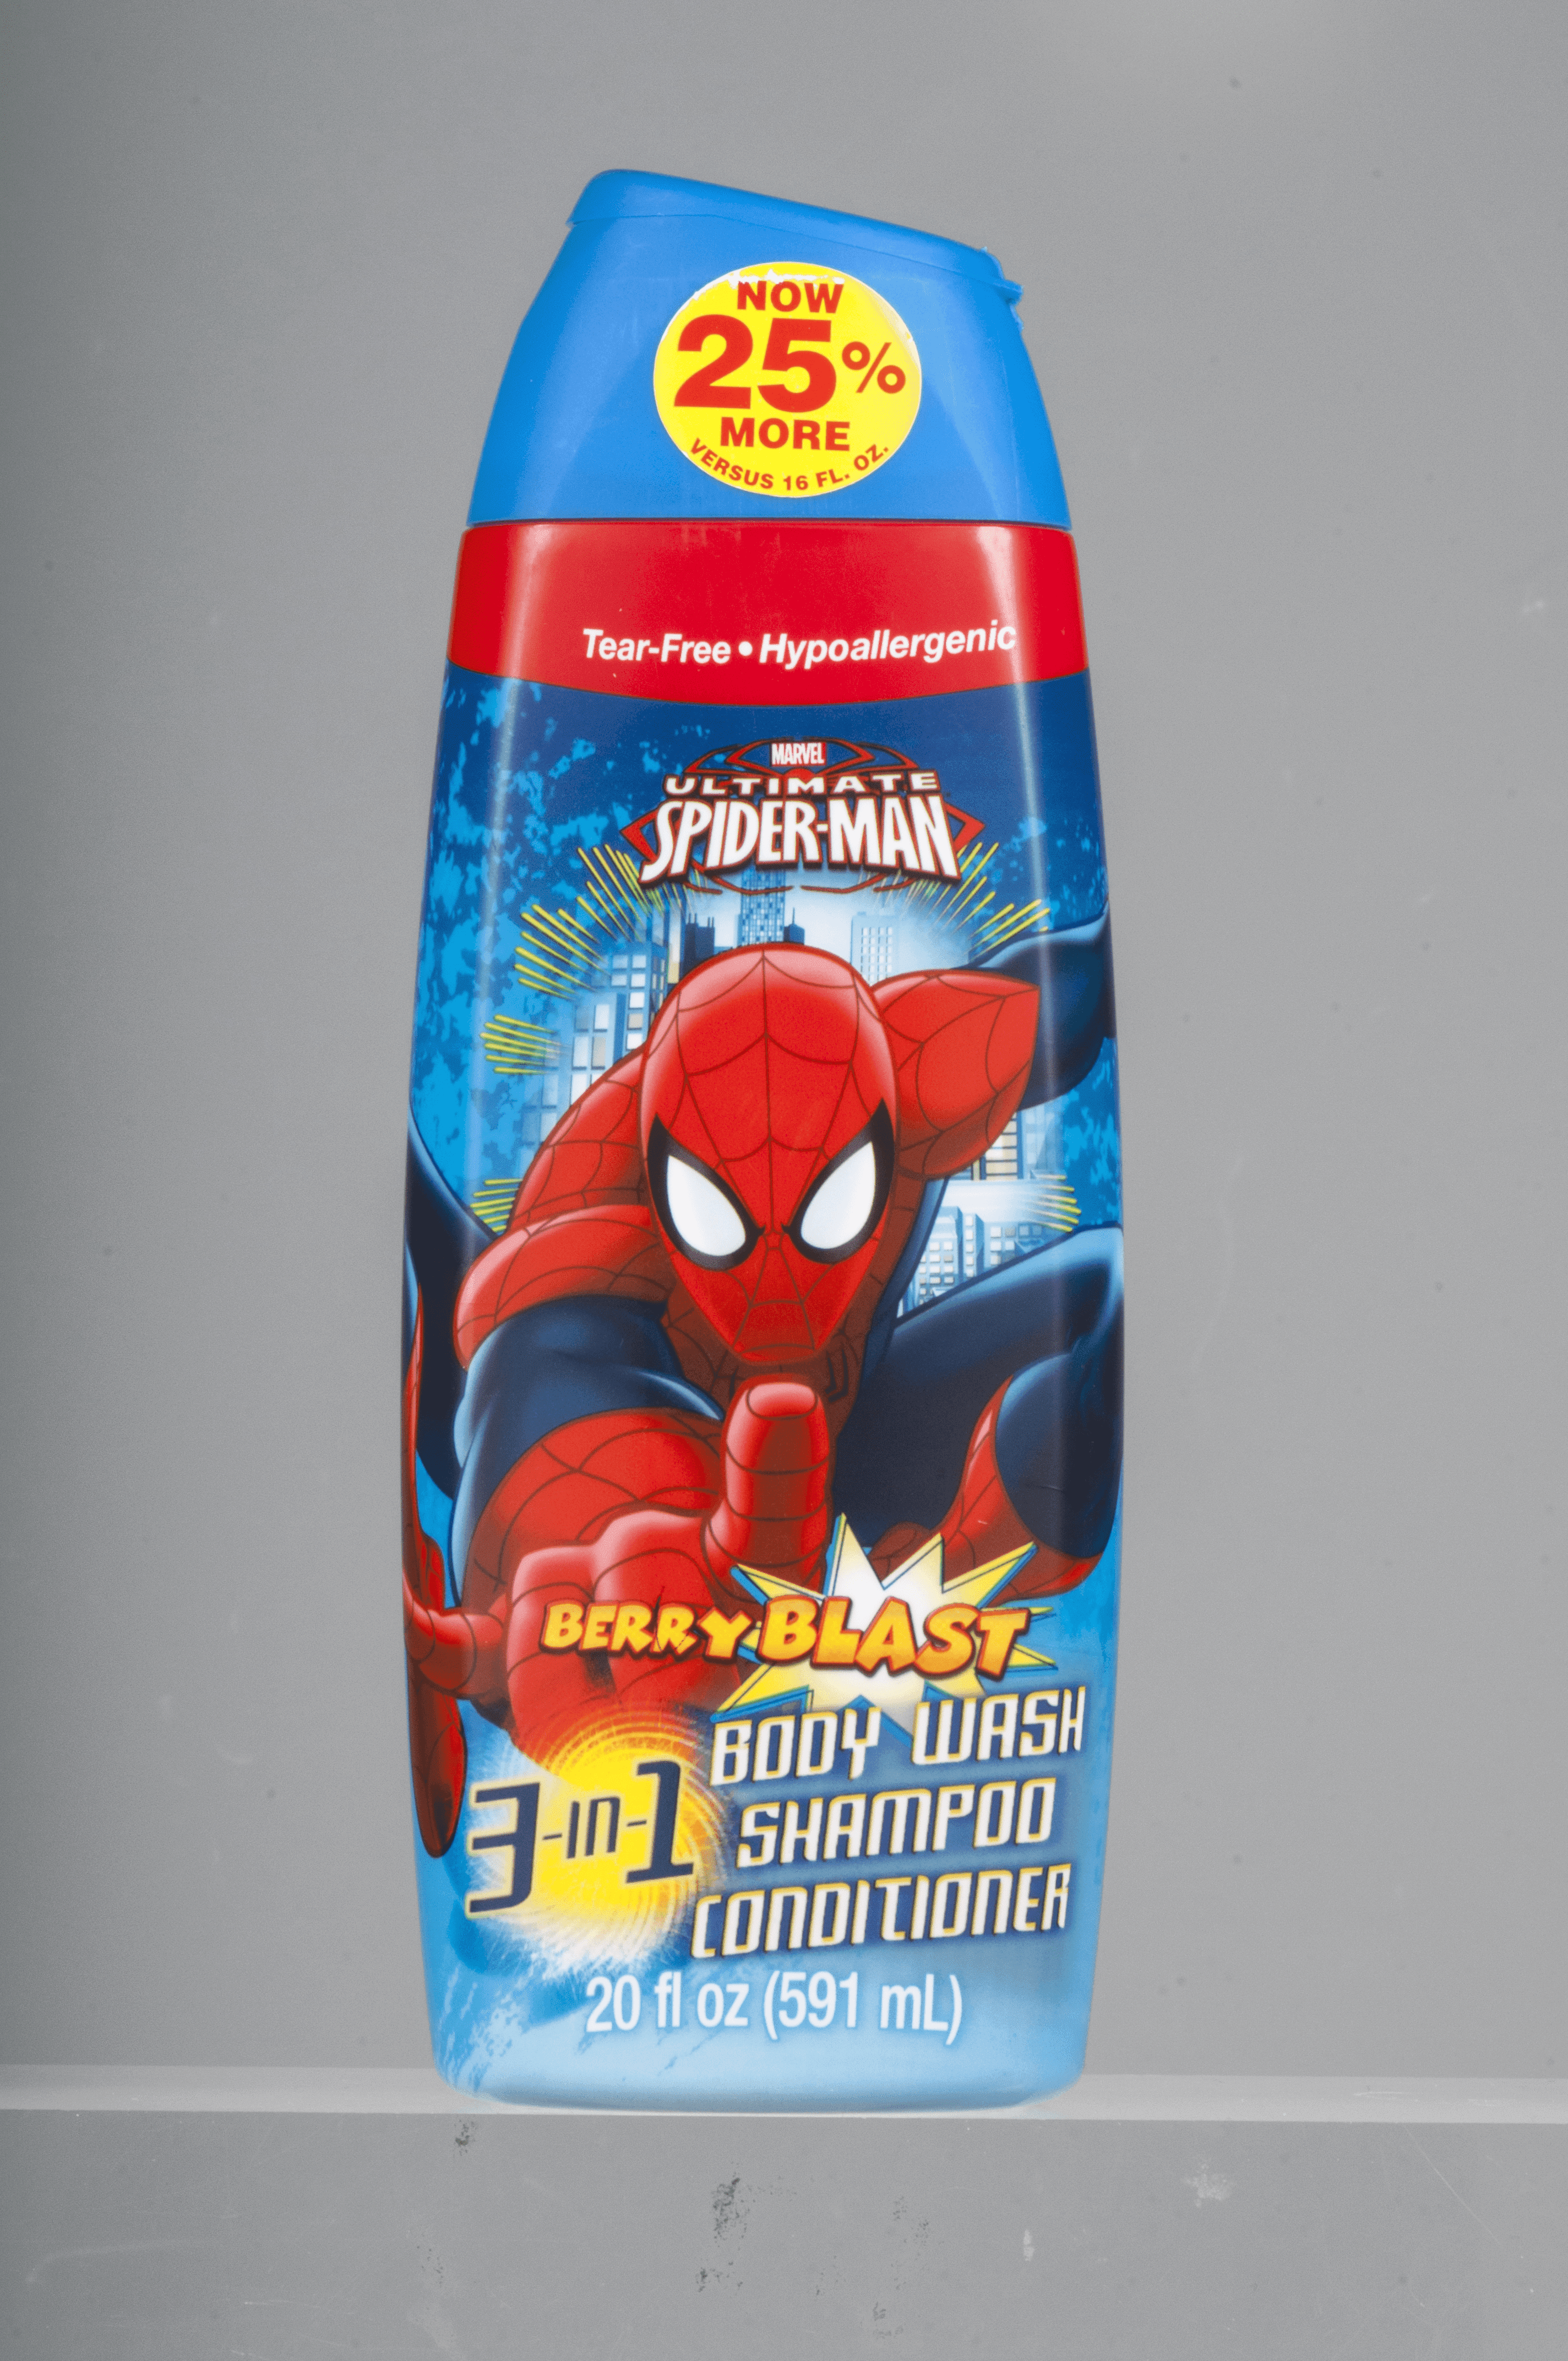 Marvel Ultimate Spiderman Berry Blast 3 in 1 Body Wash Shampoo &  Conditioner, 20 Fl Oz - Walmart.com